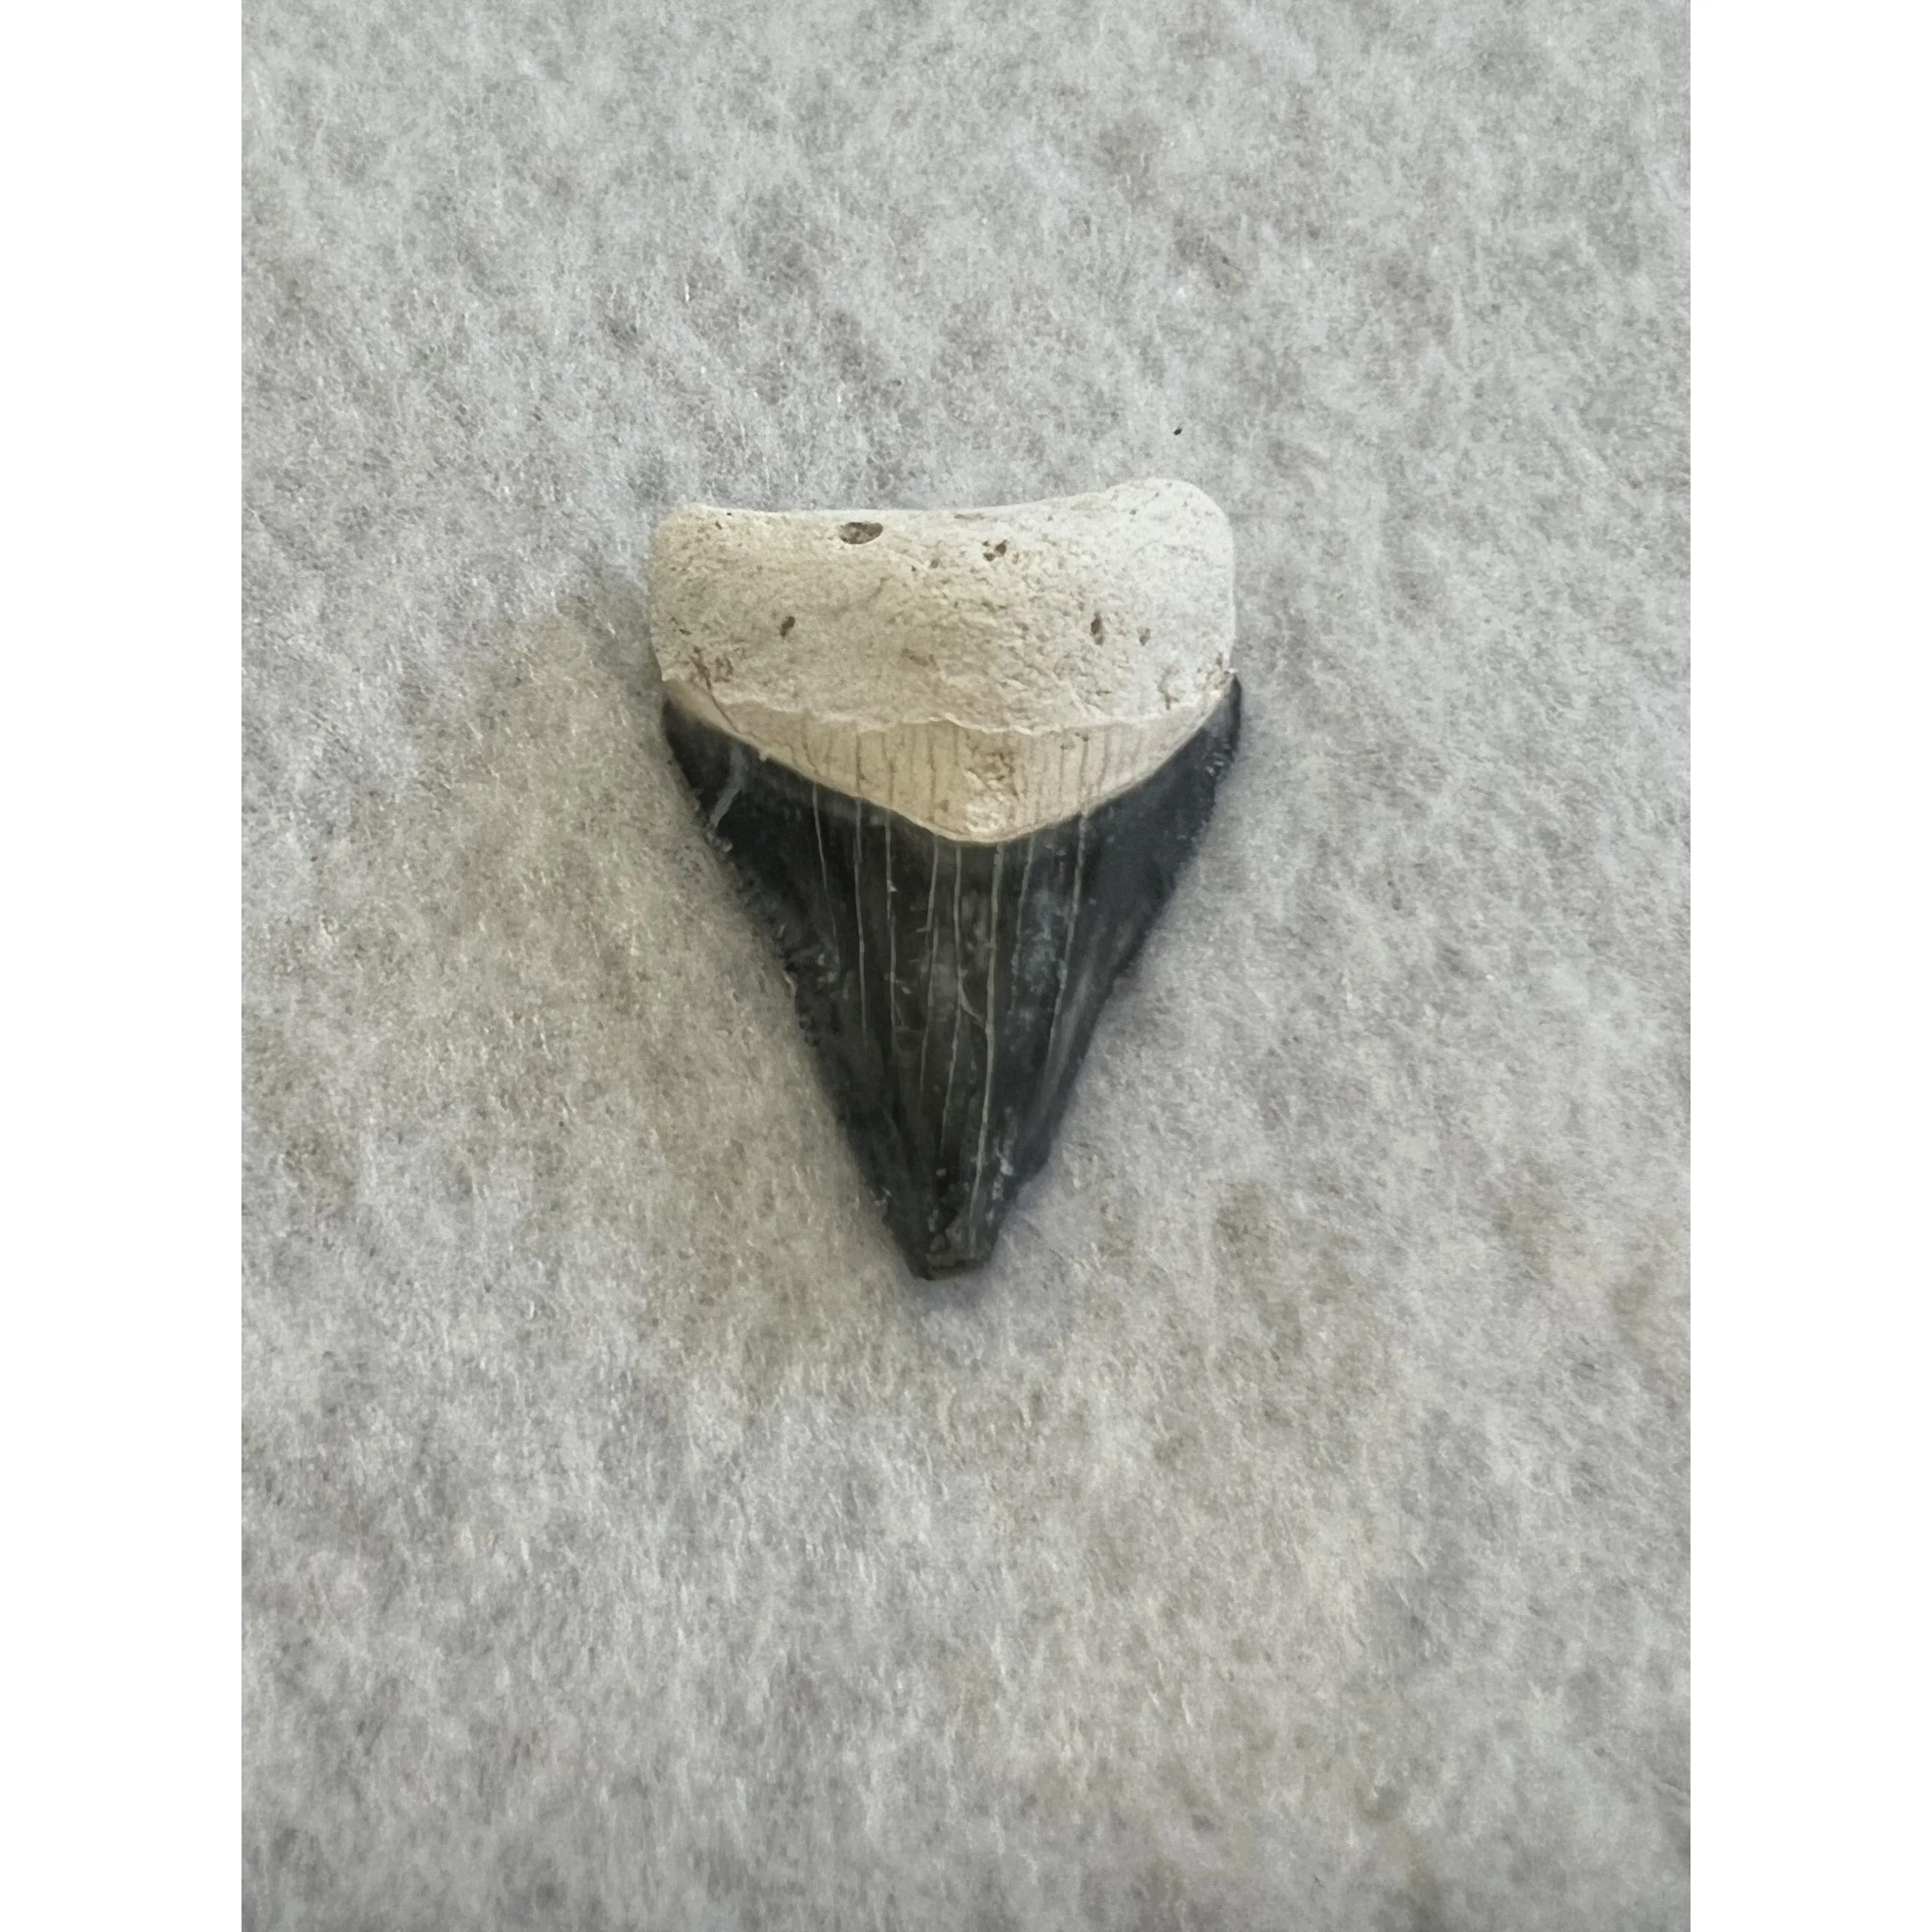 Megalodon Tooth  Bone Valley, Florida 1.50 inch Prehistoric Online